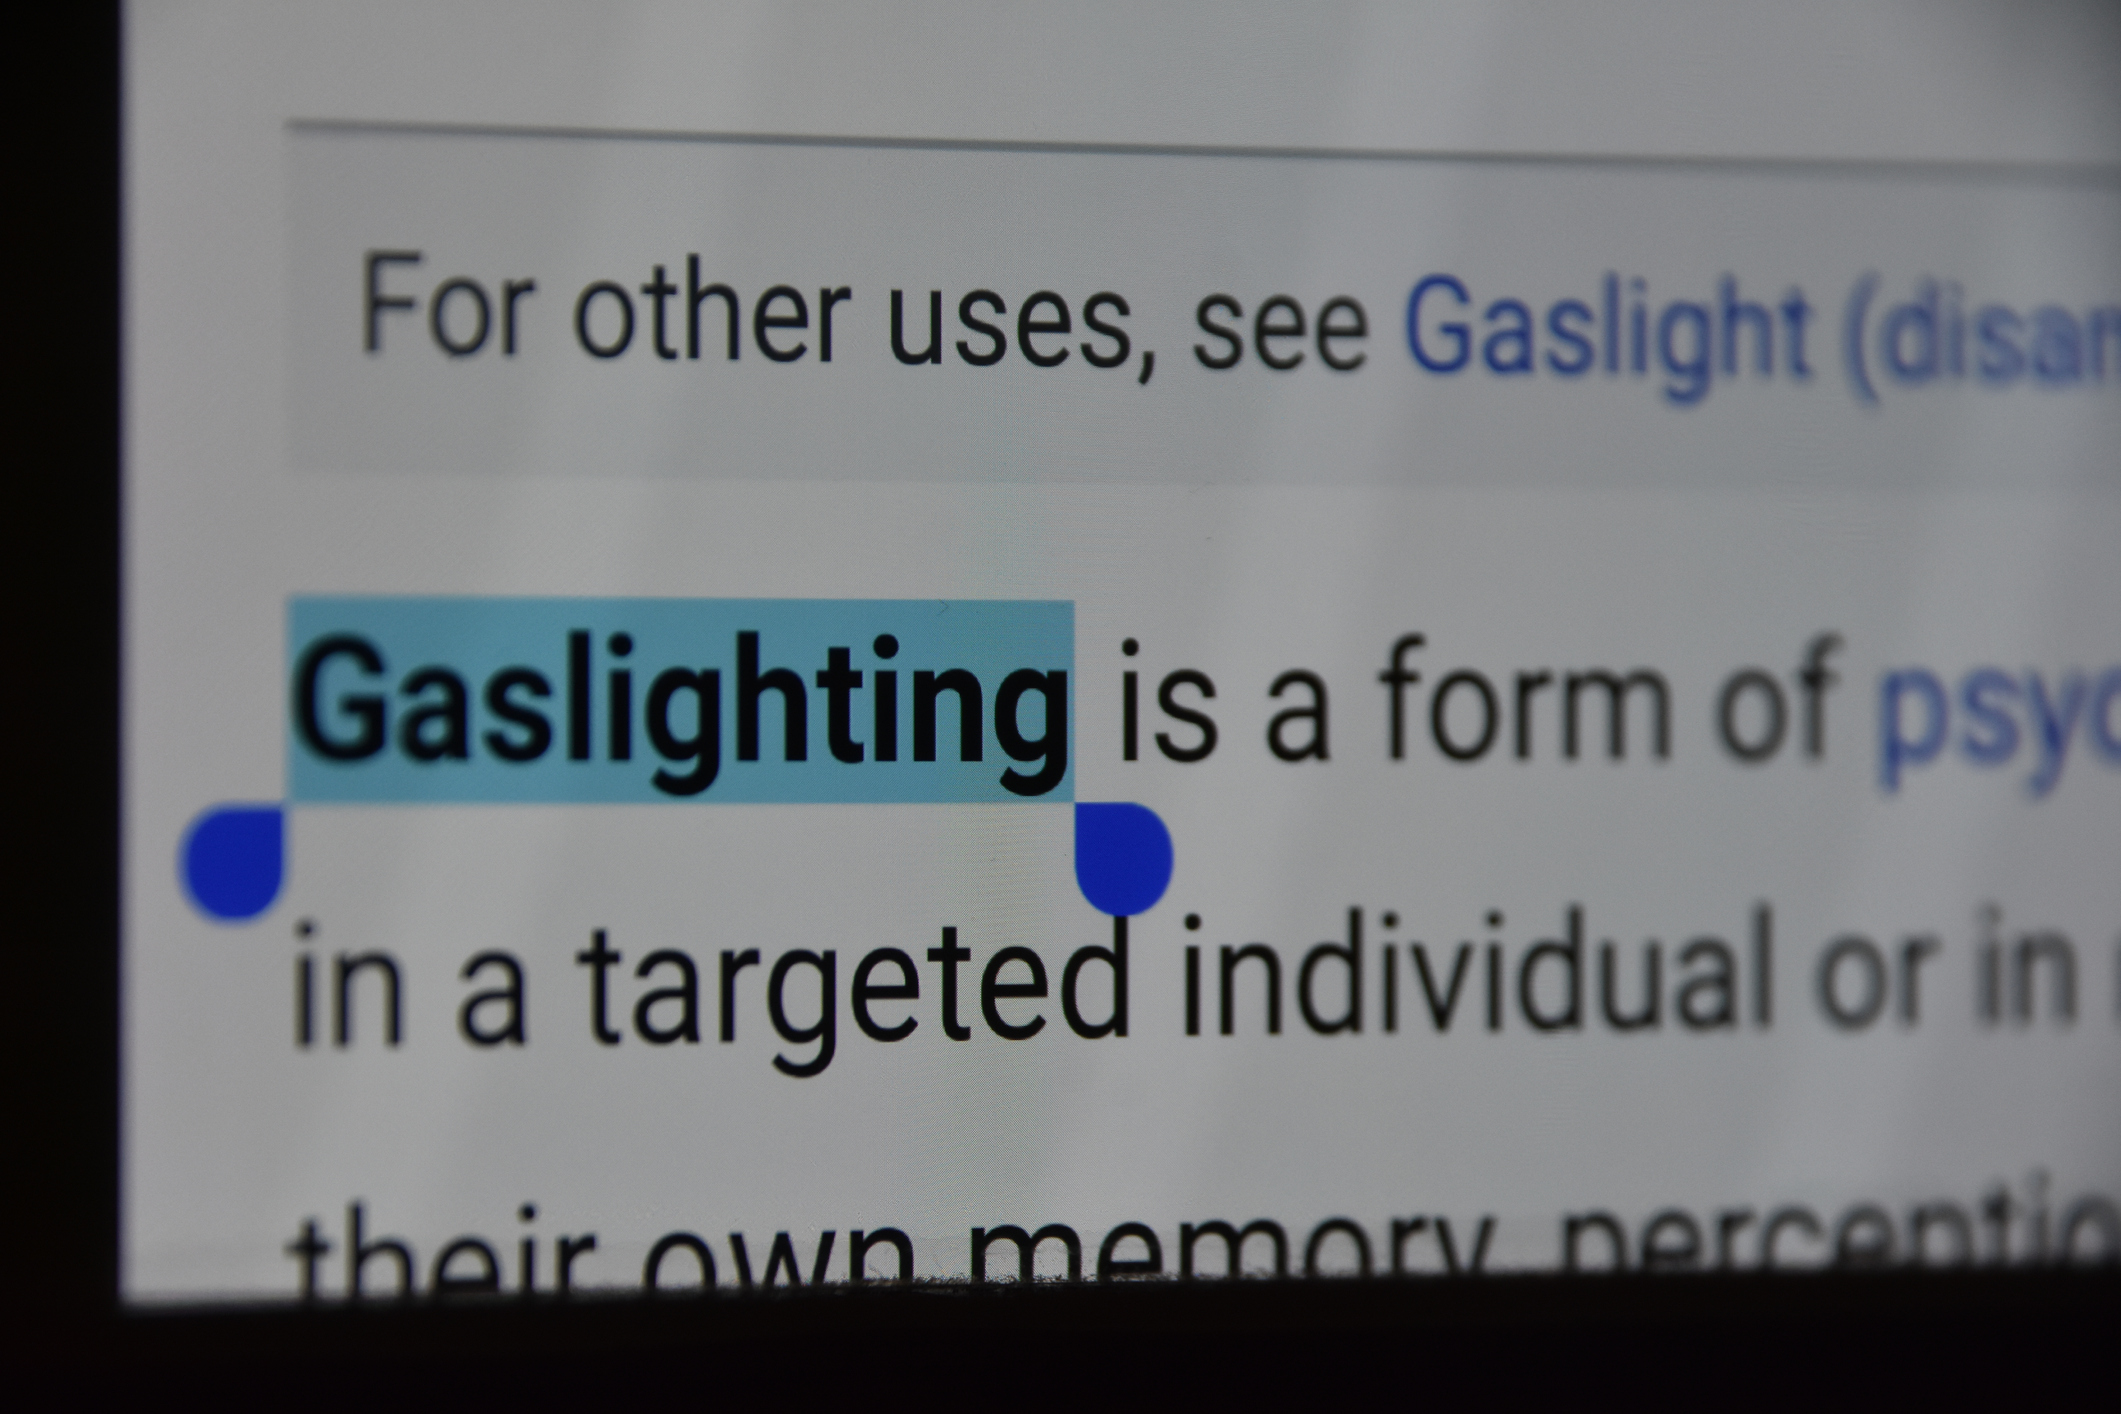 gaslight definition photo